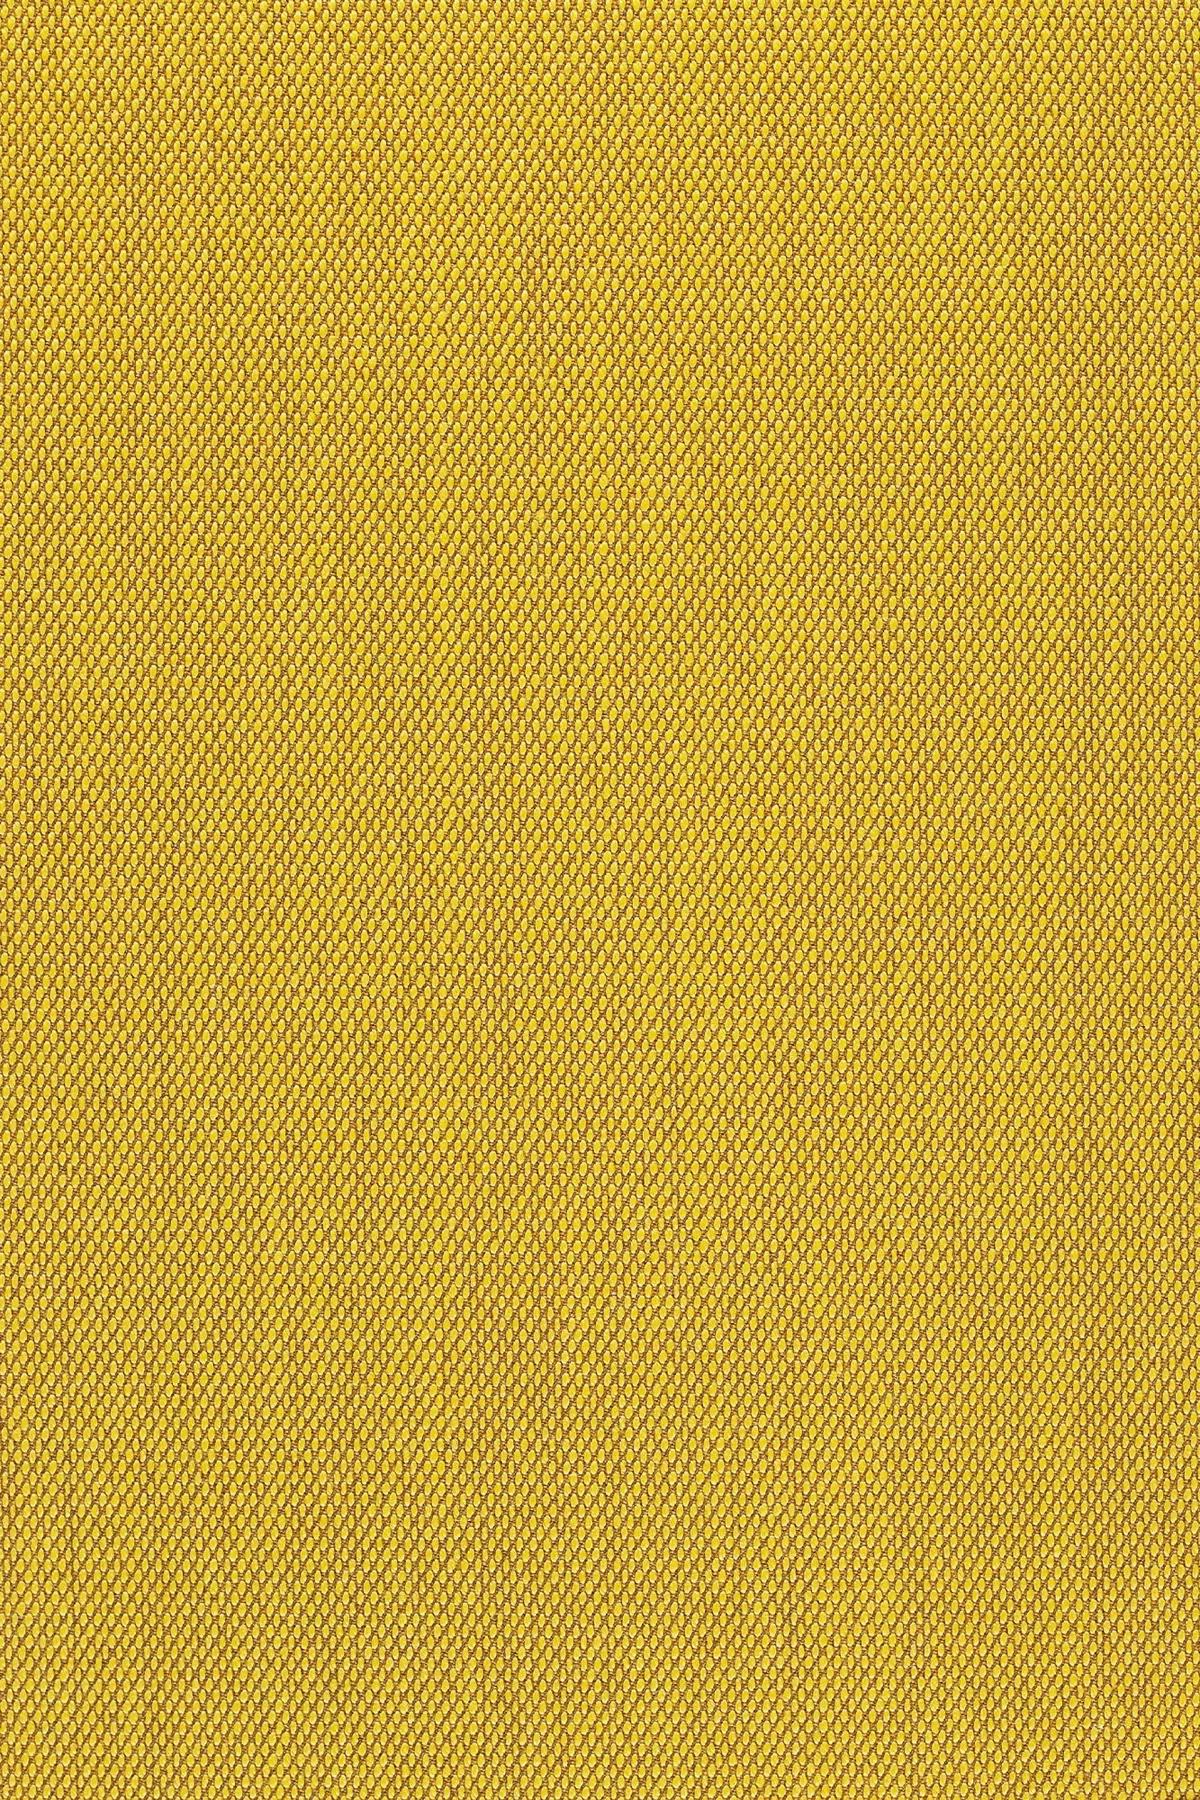 Fabric sample Steelcut Trio 3 453 yellow